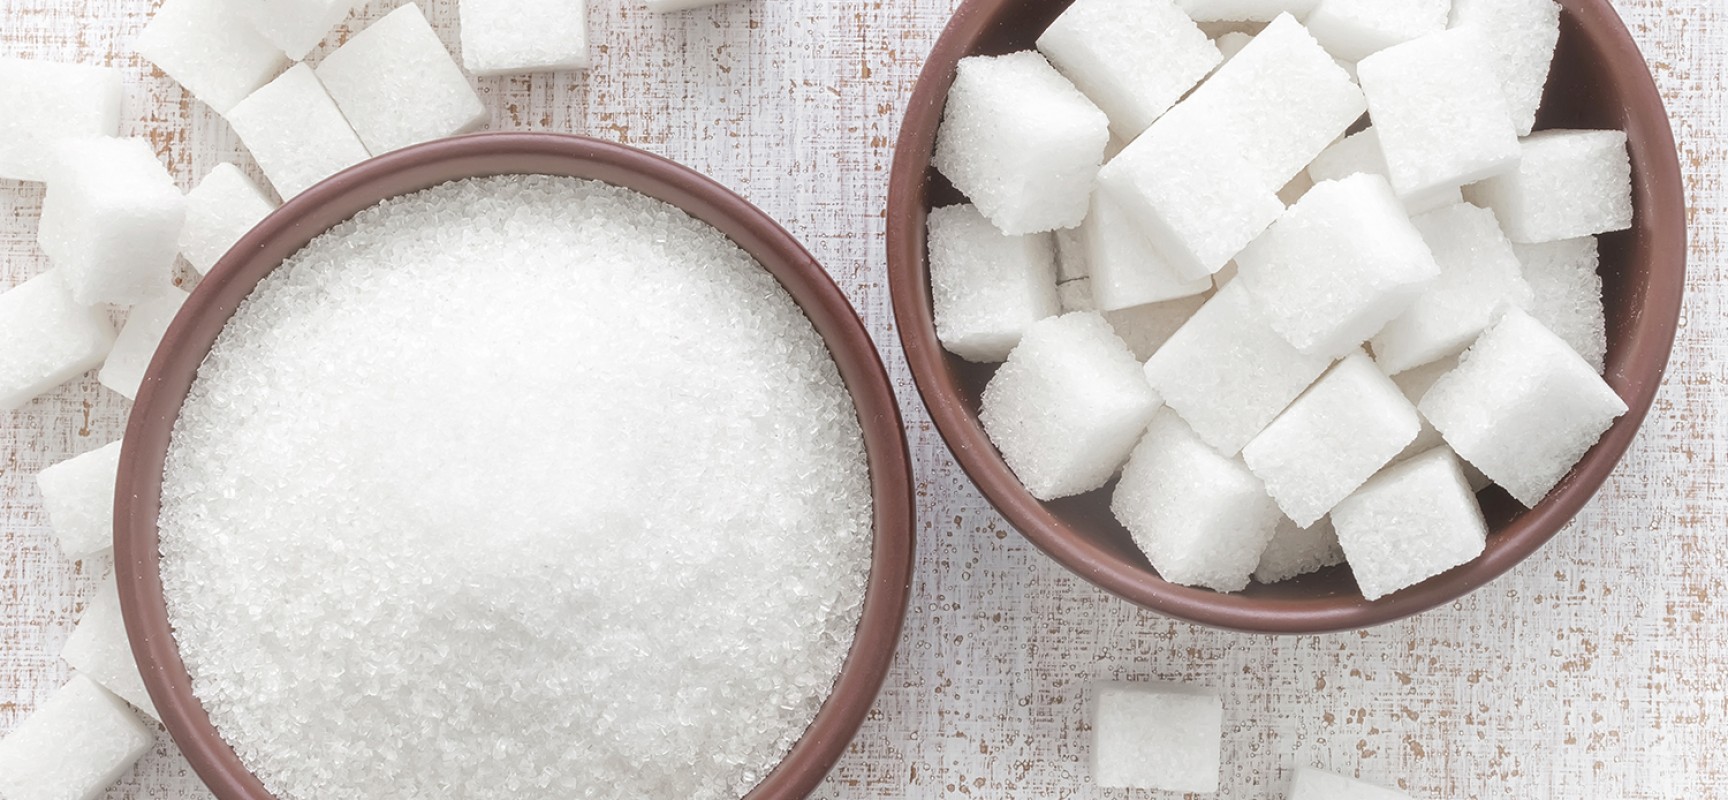 Consumo de açúcar aumenta no Brasil